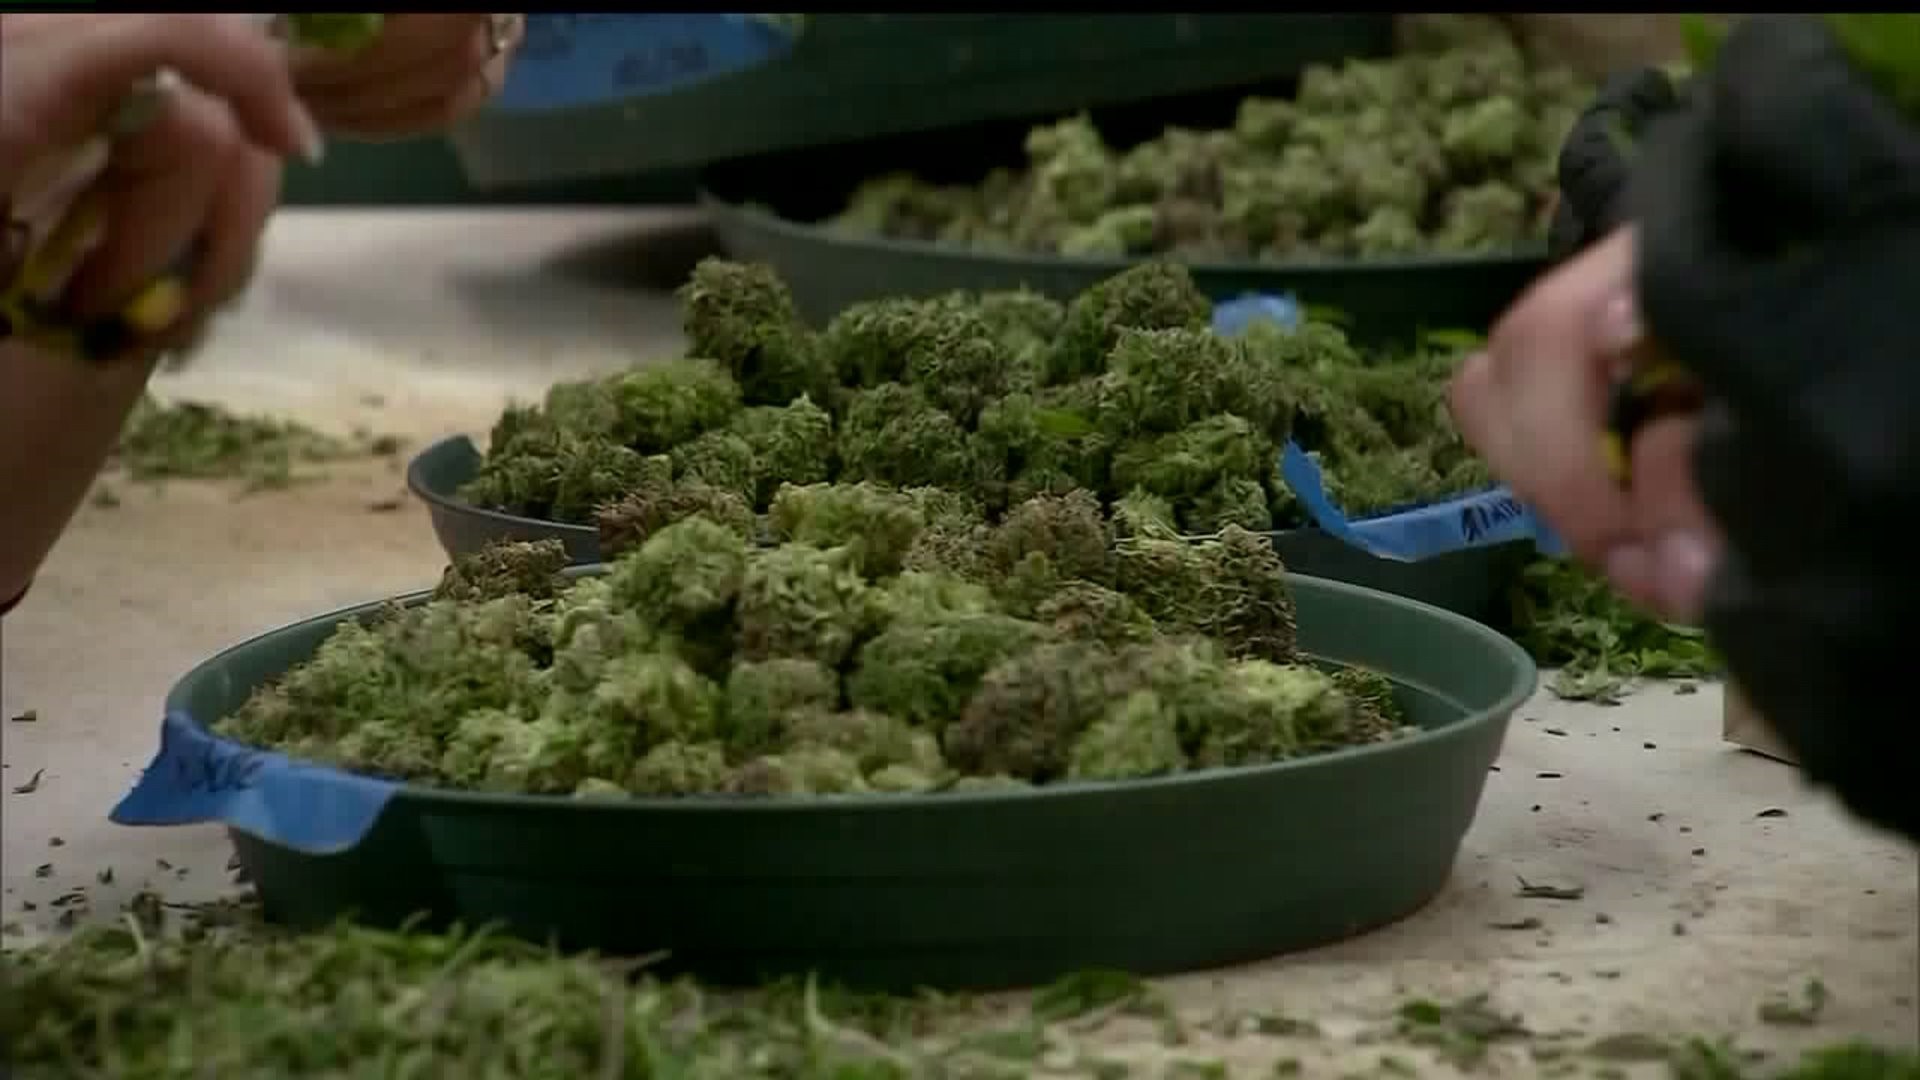 Recreational marijuana may soon be legal one year after medical marijuana made available